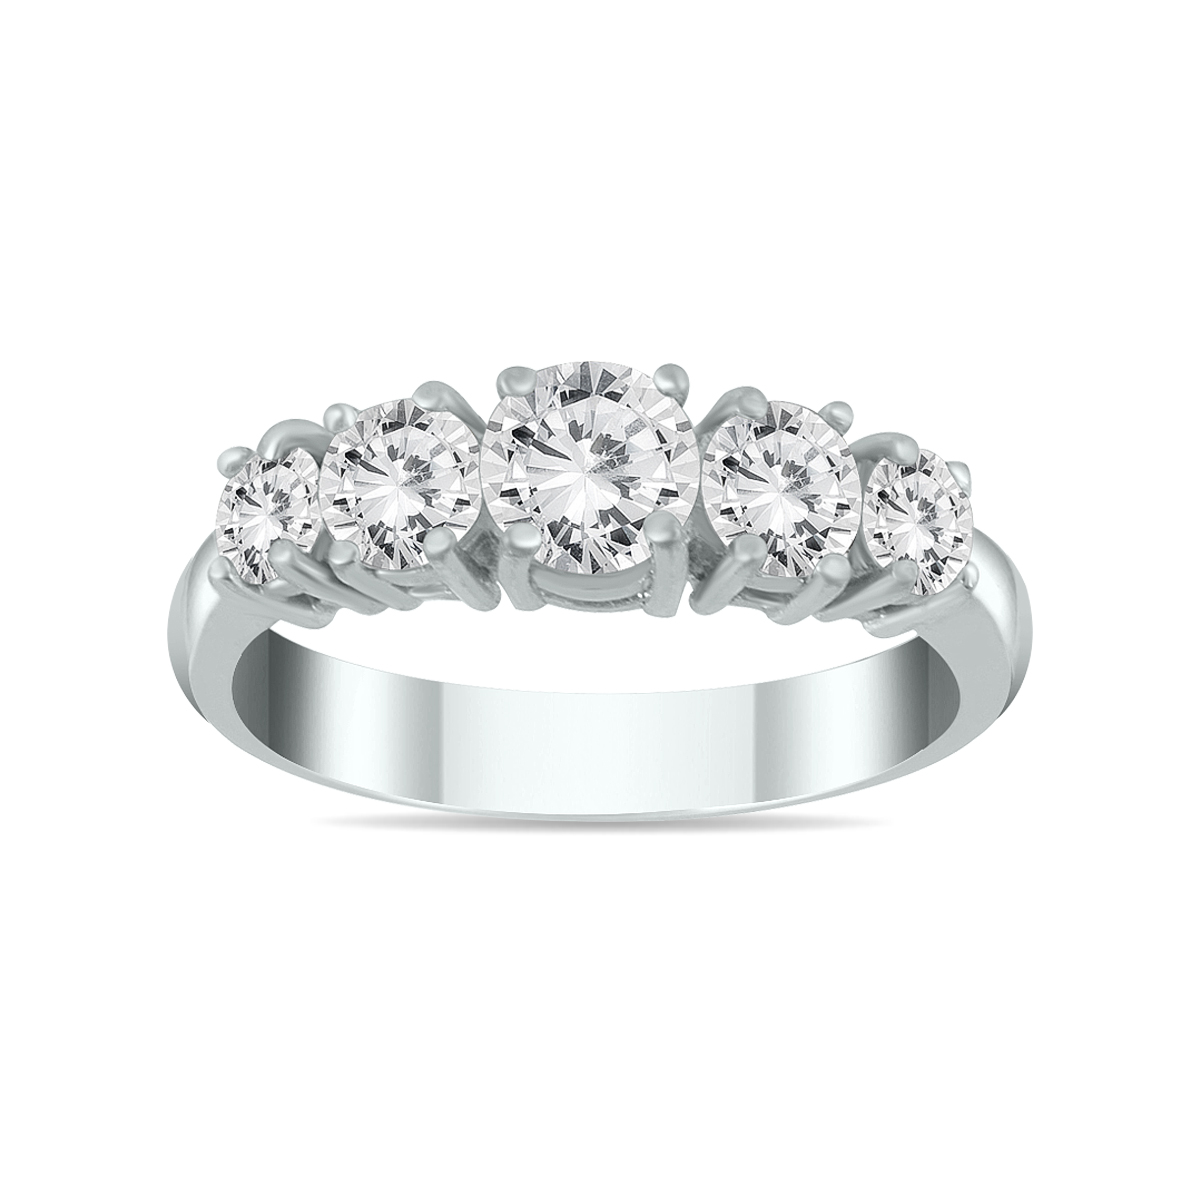 Image of 1 1/4 Carat TW 5 Stone White Diamond Ring in 14K White Gold (K-L Color I2-I3 Clarity)